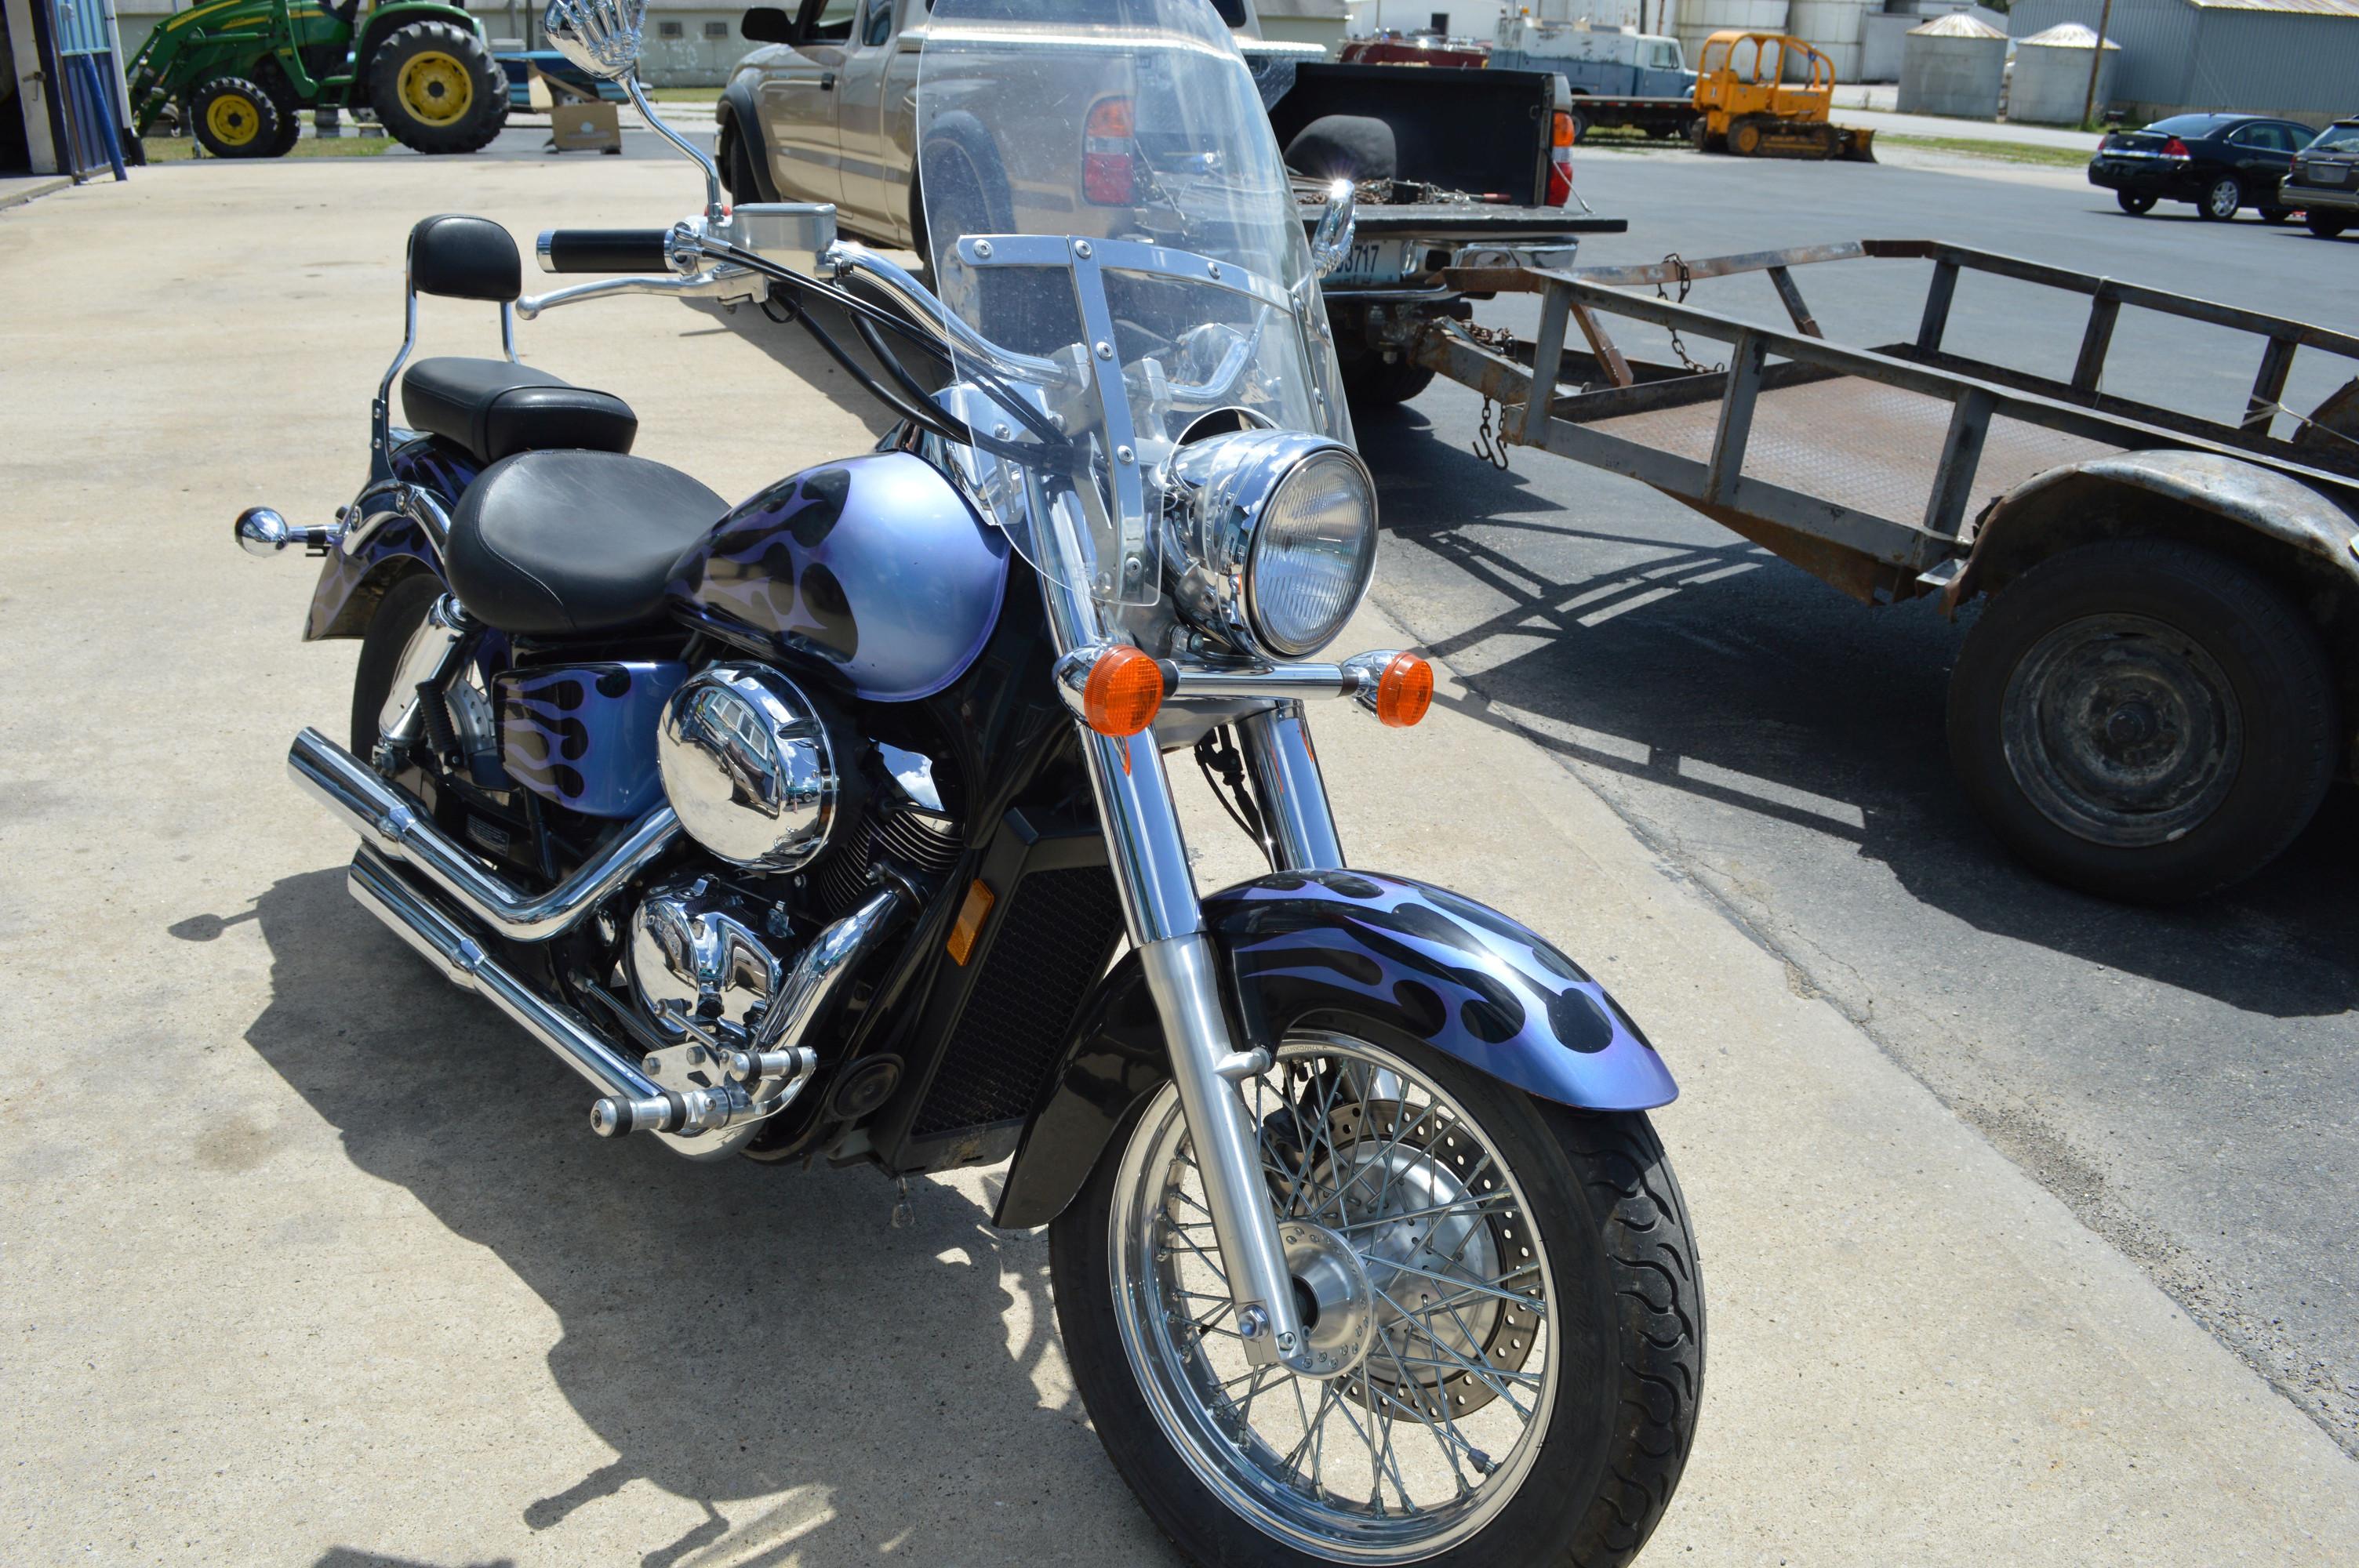 2003 Honda 750 Shadow Motorcycle, Custome Paint And Pipes, Runs Great, 24,0